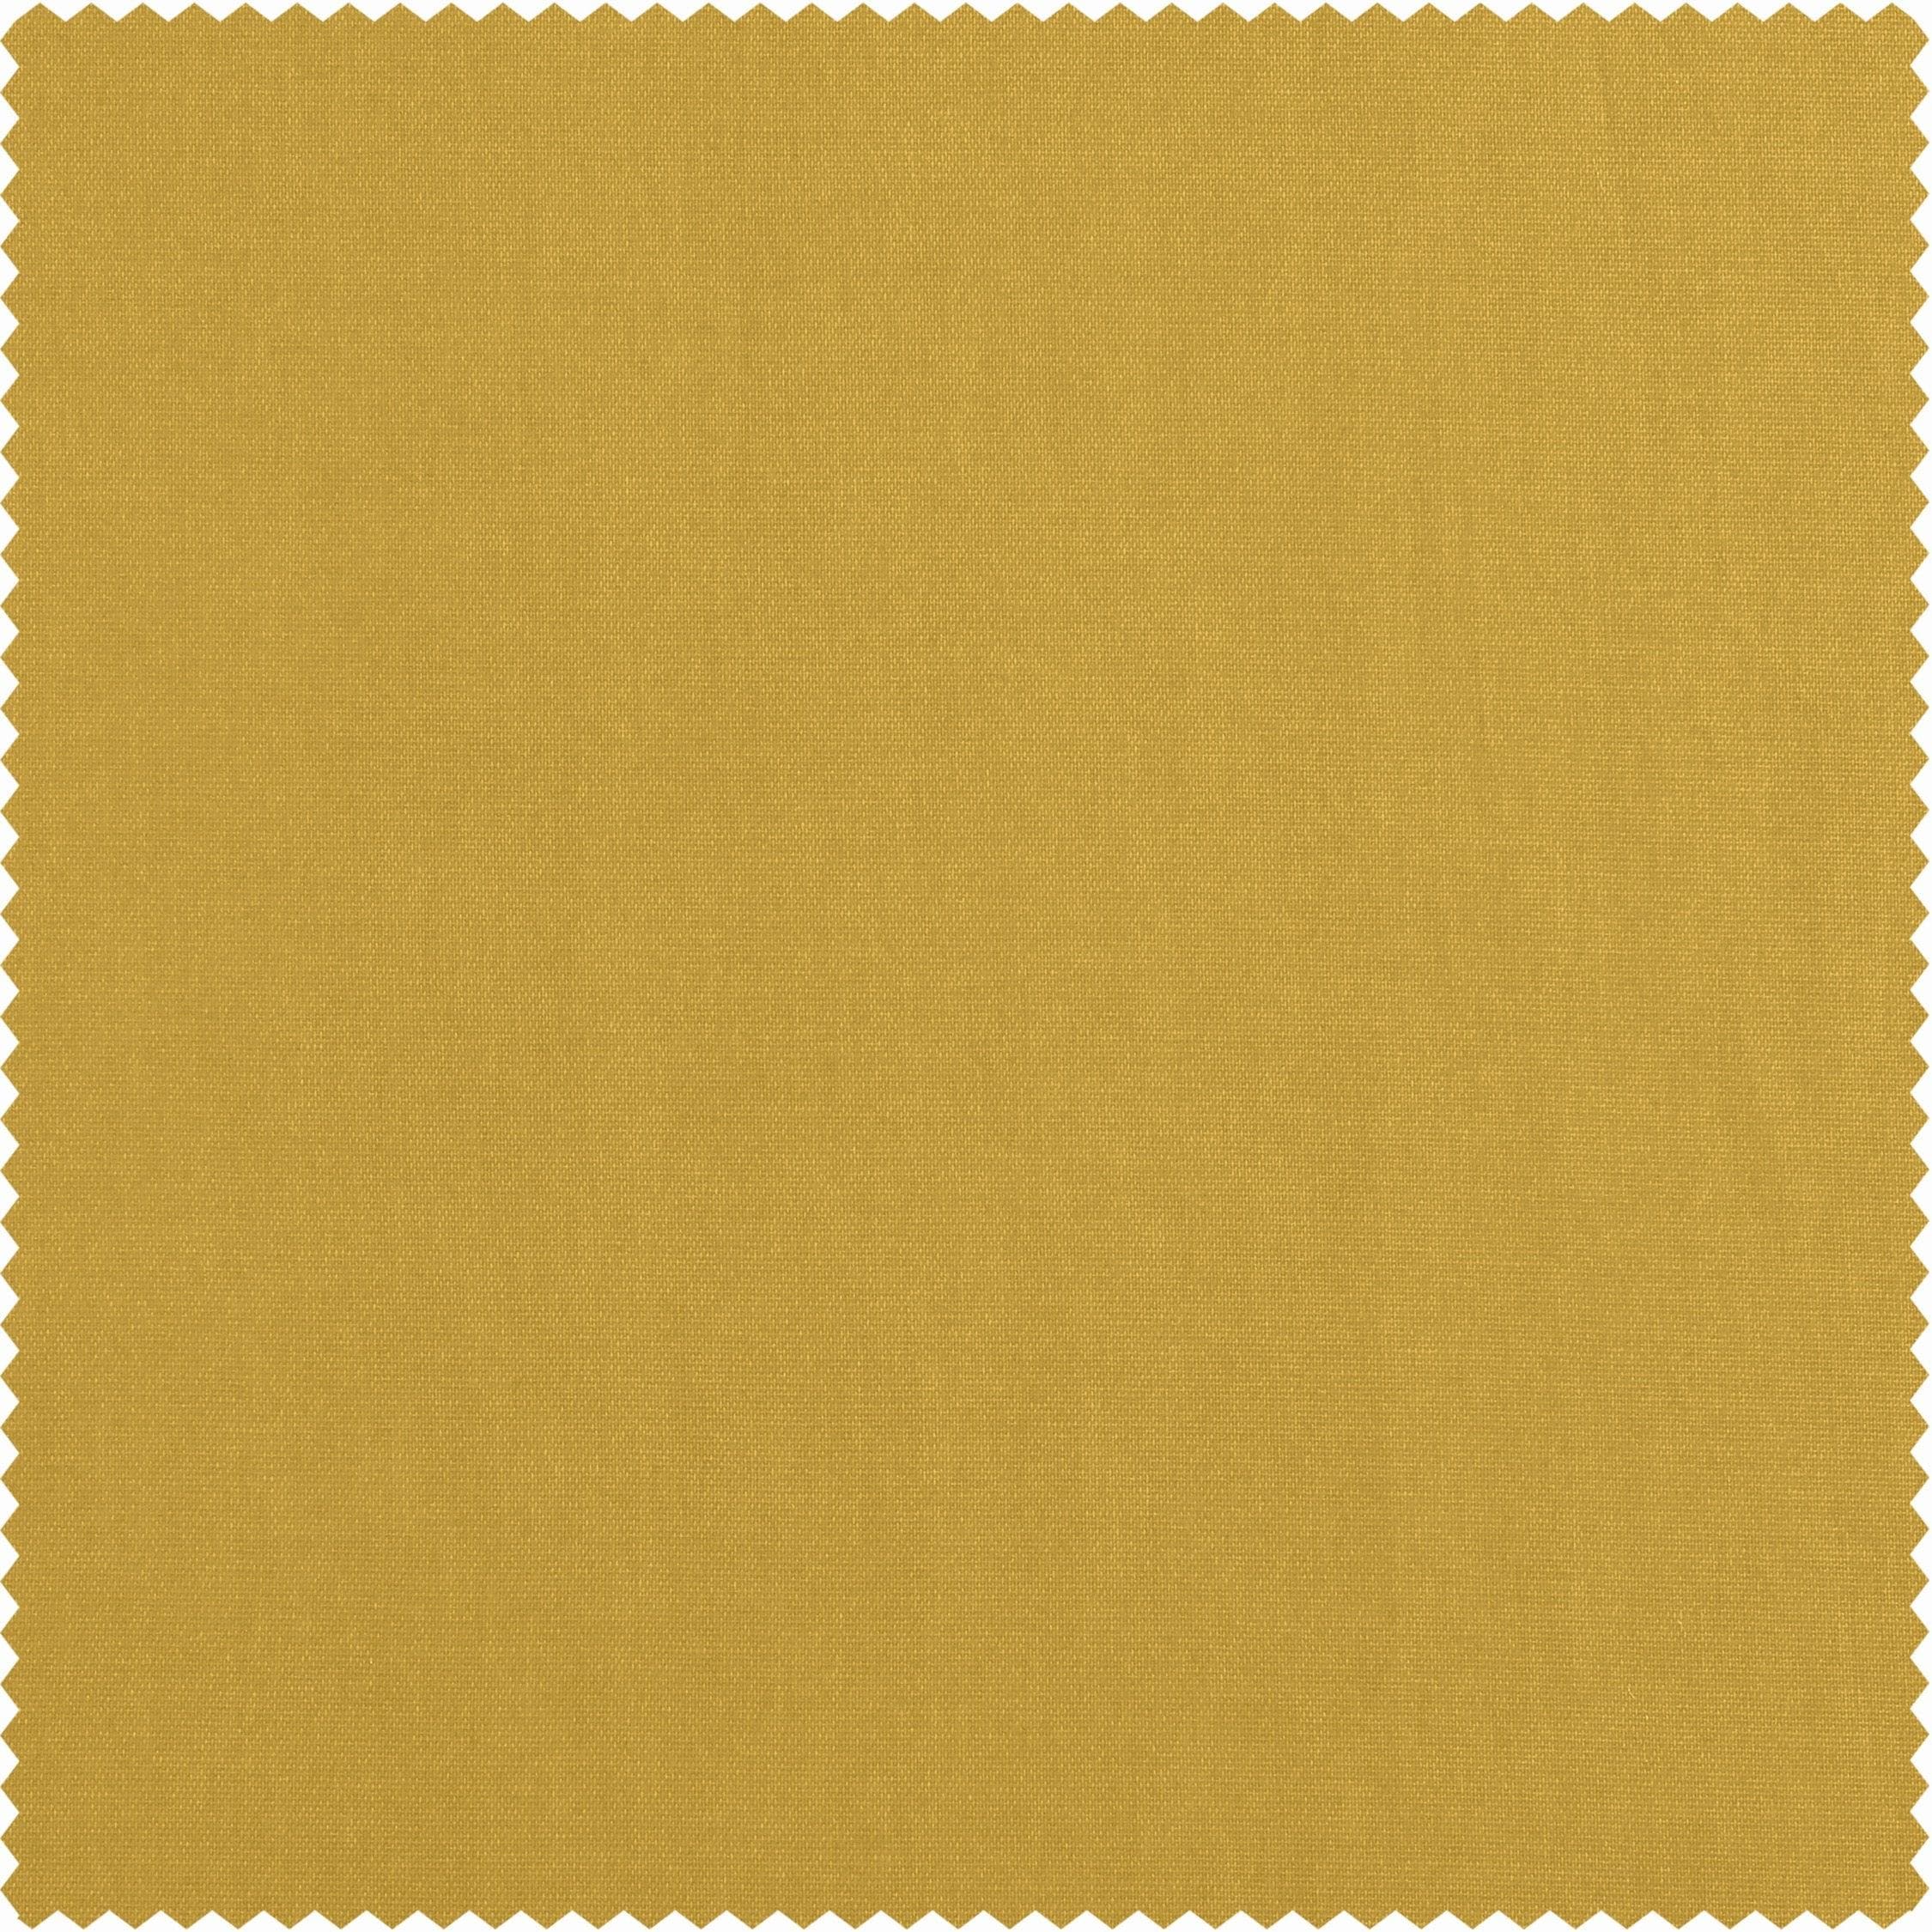 Mustard Yellow Solid Cotton Twill Room Darkening Curtain